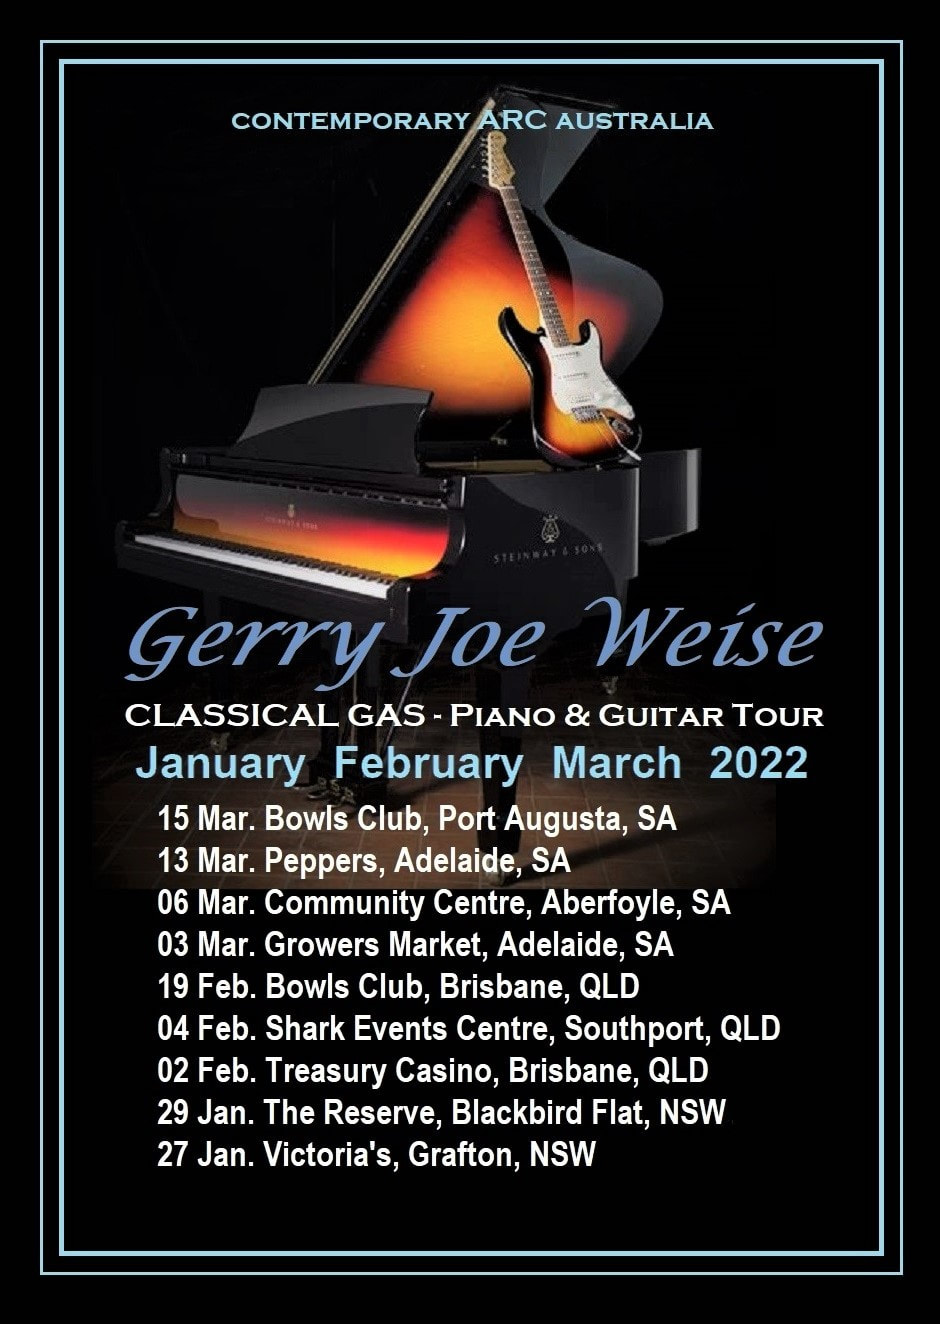 Gerry Joe Weise, Australian pianist and guitarist, concert tours.